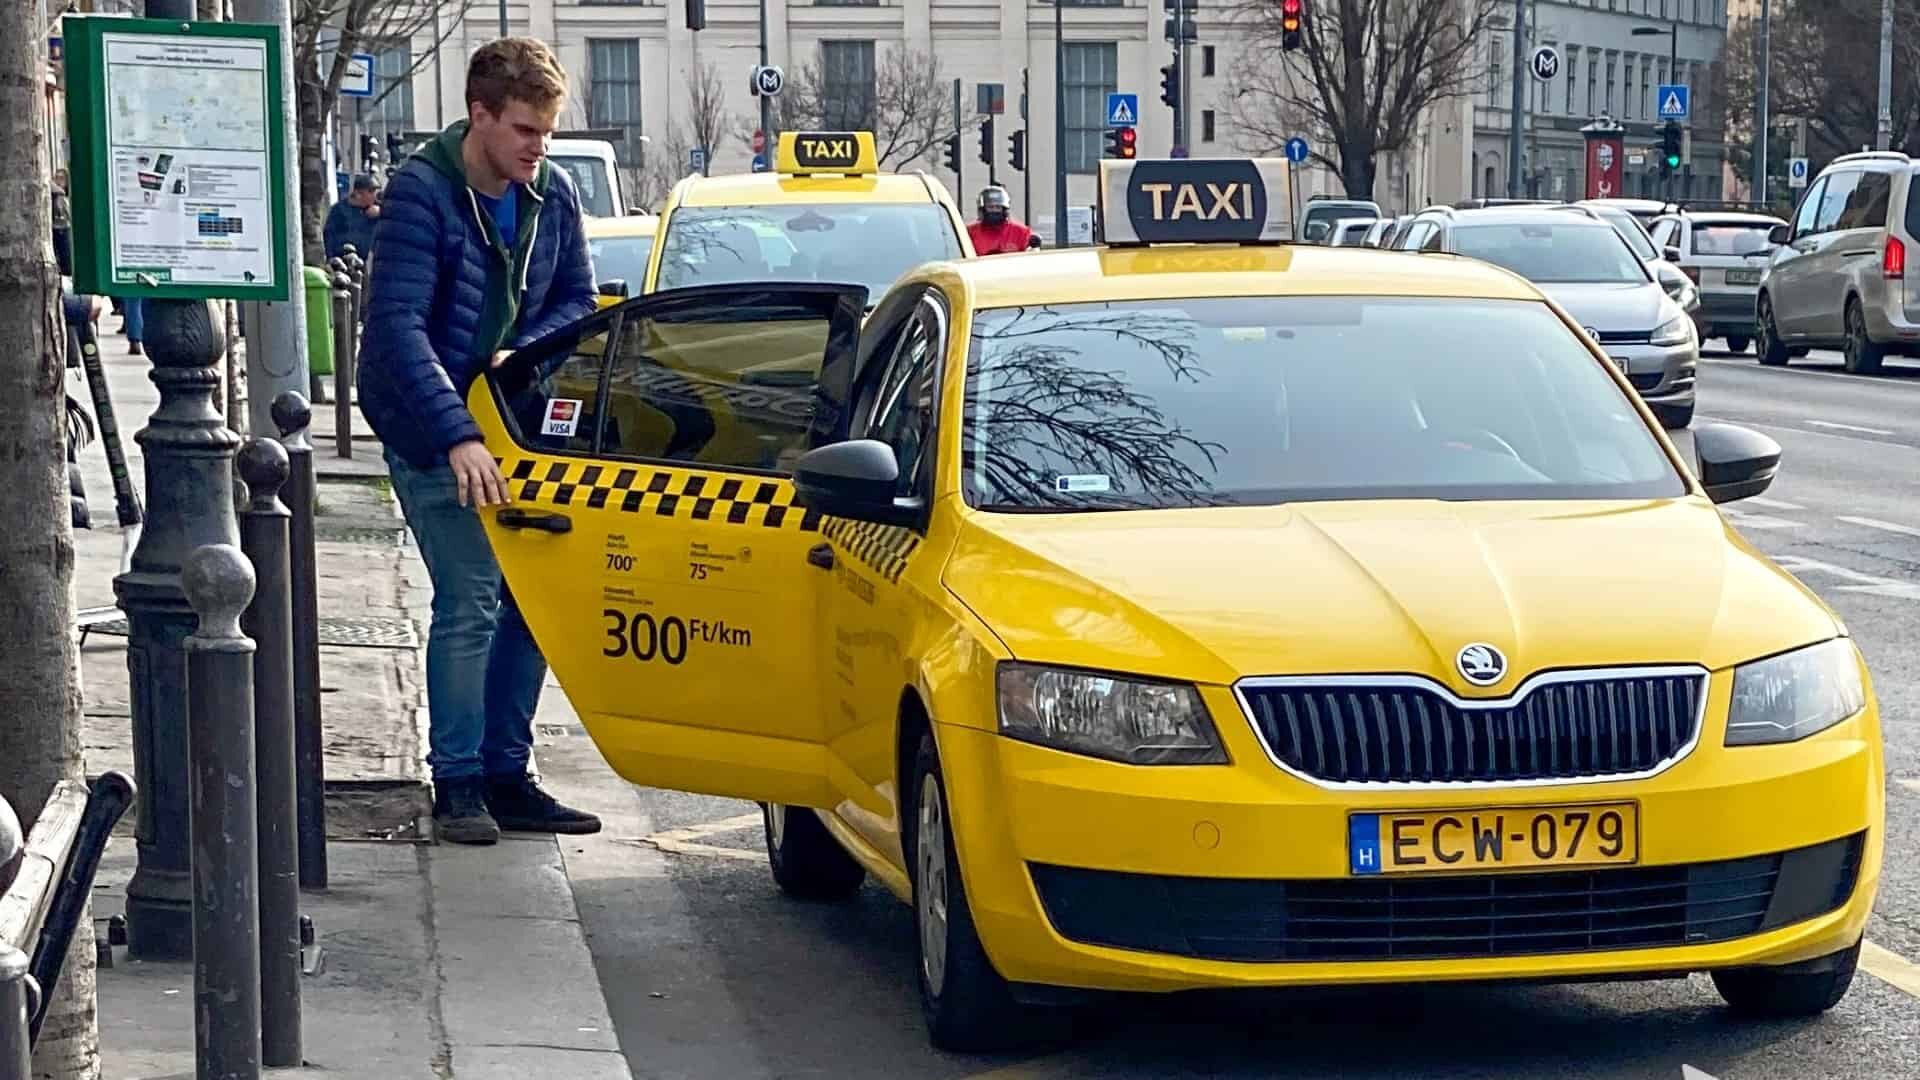 Cab at Deak Ferenc square